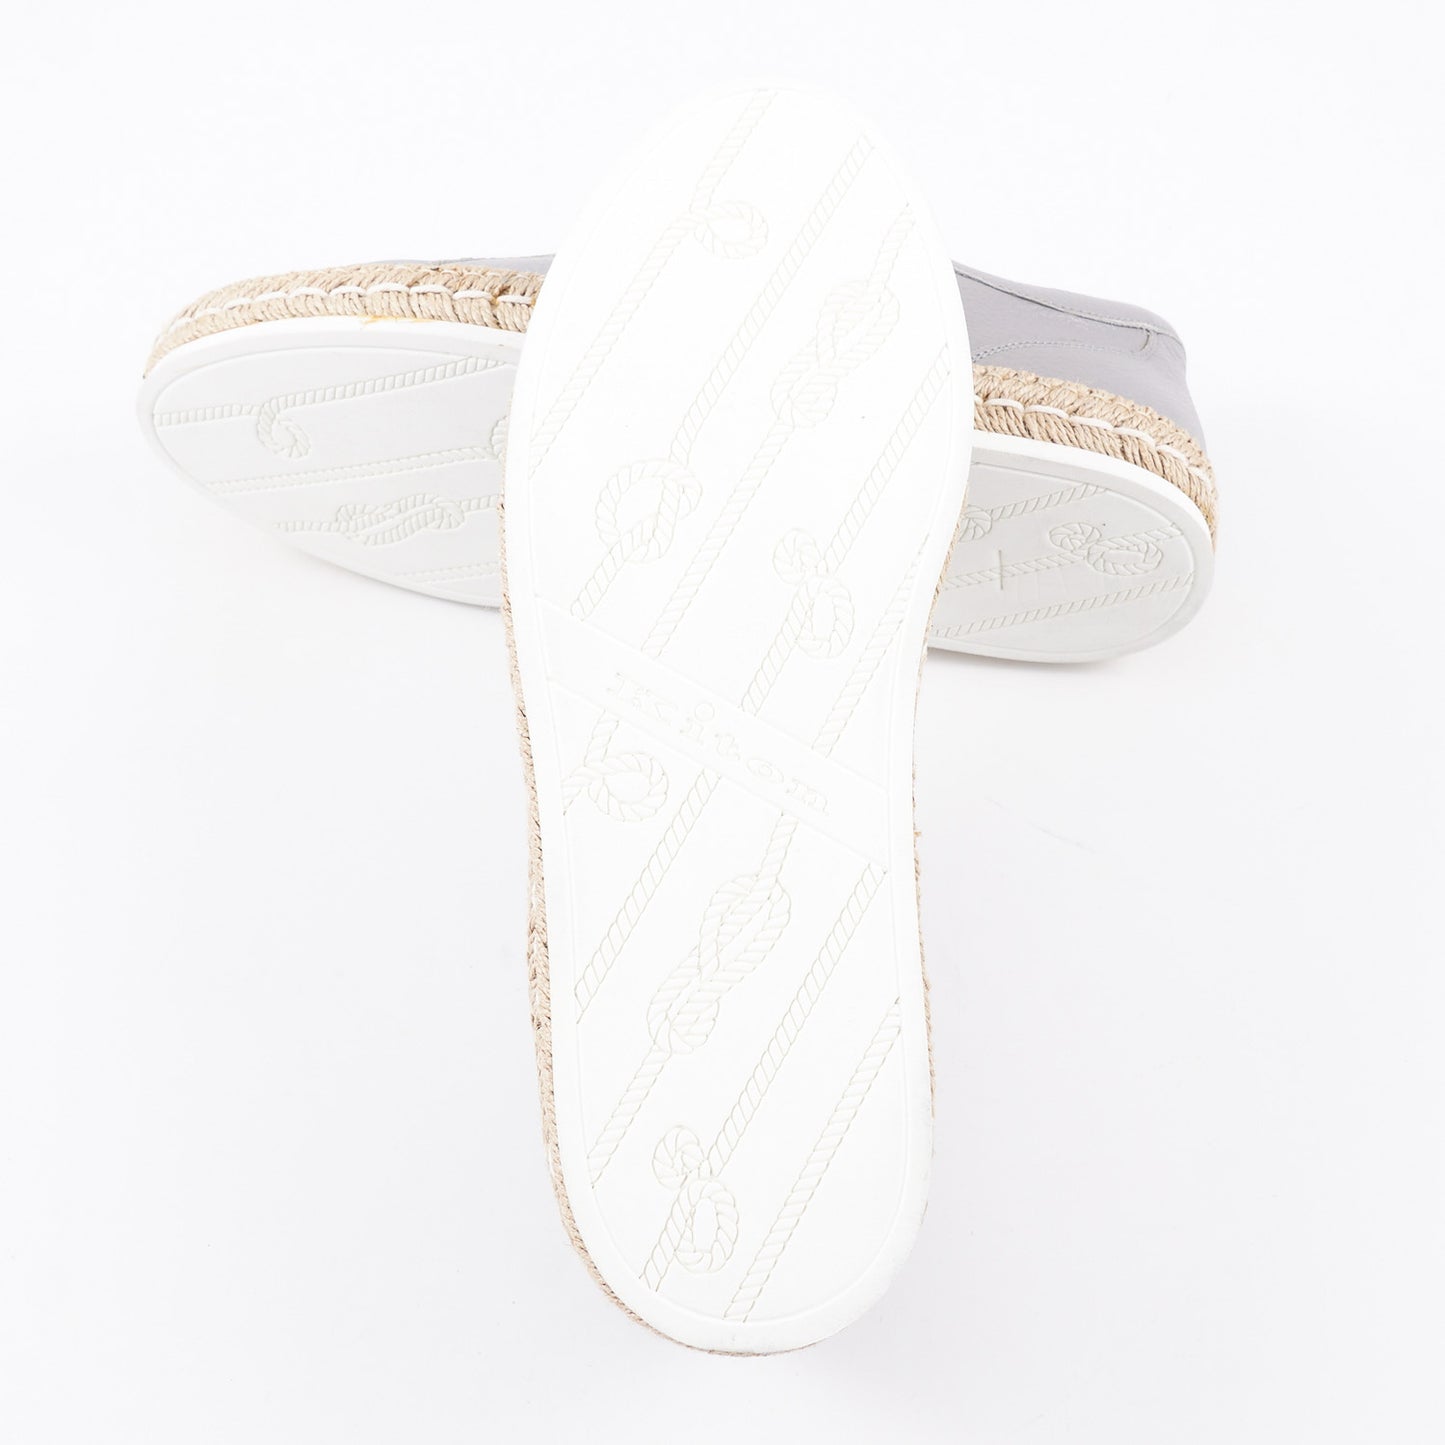 Kiton Soft Calf Leather Sneakers - Top Shelf Apparel